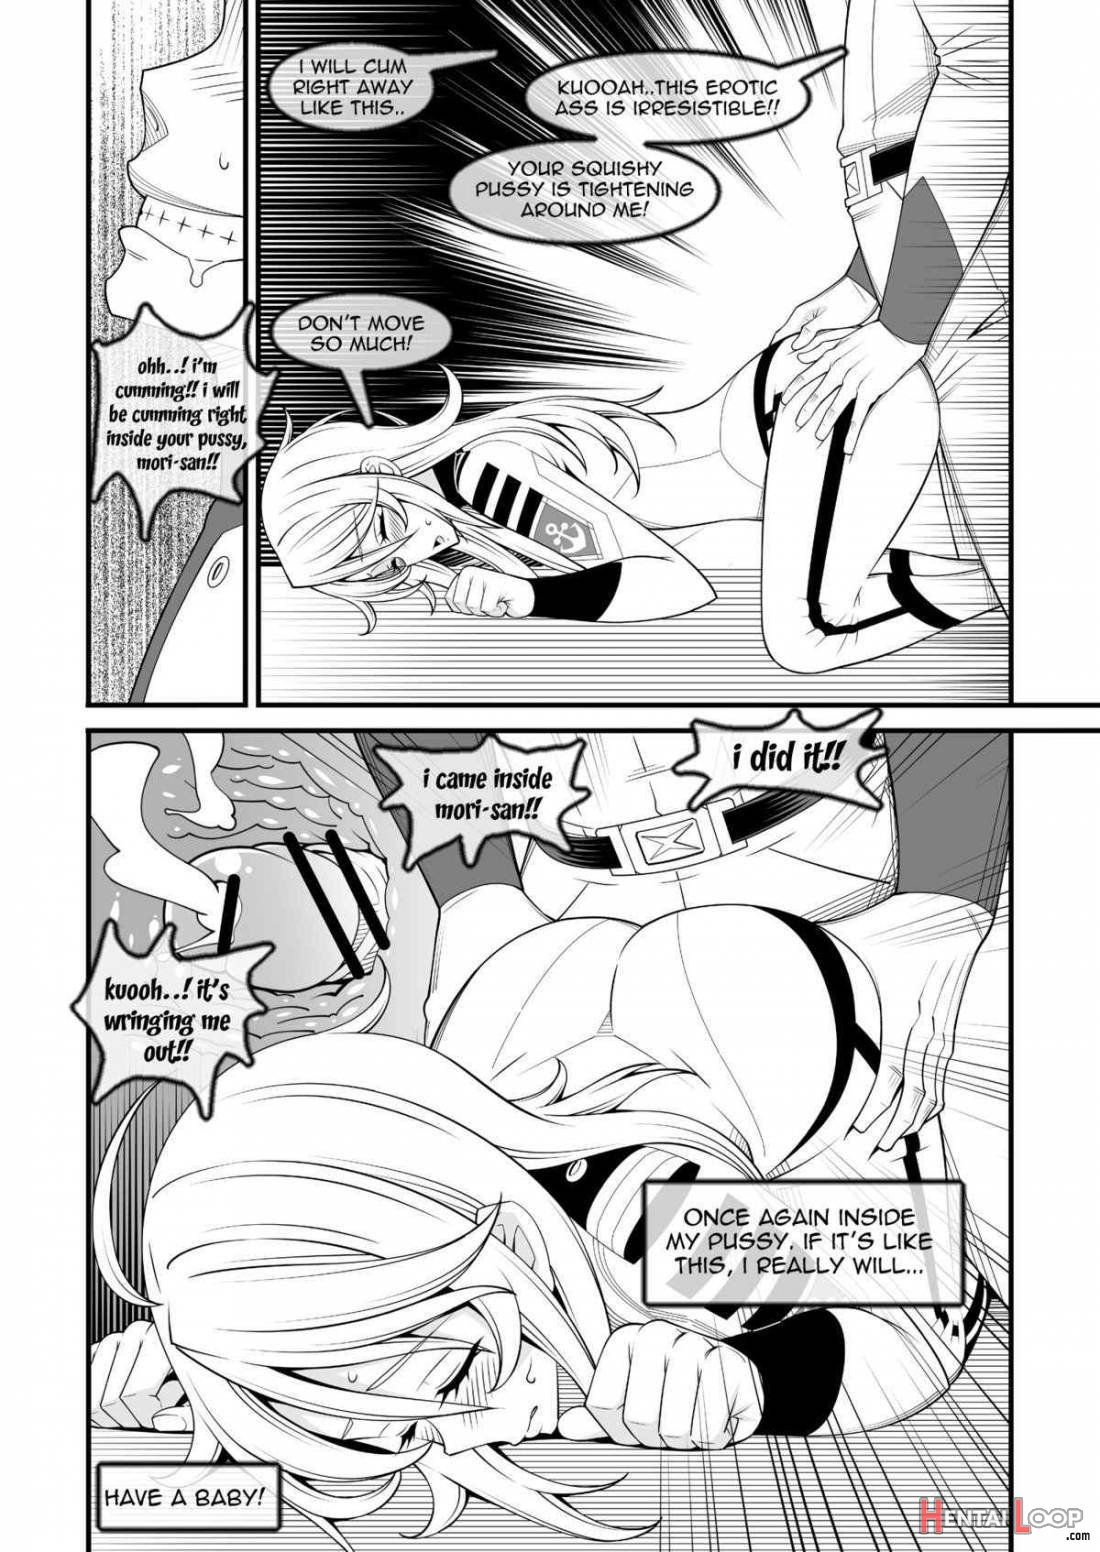 Yamato Nadeshiko page 10